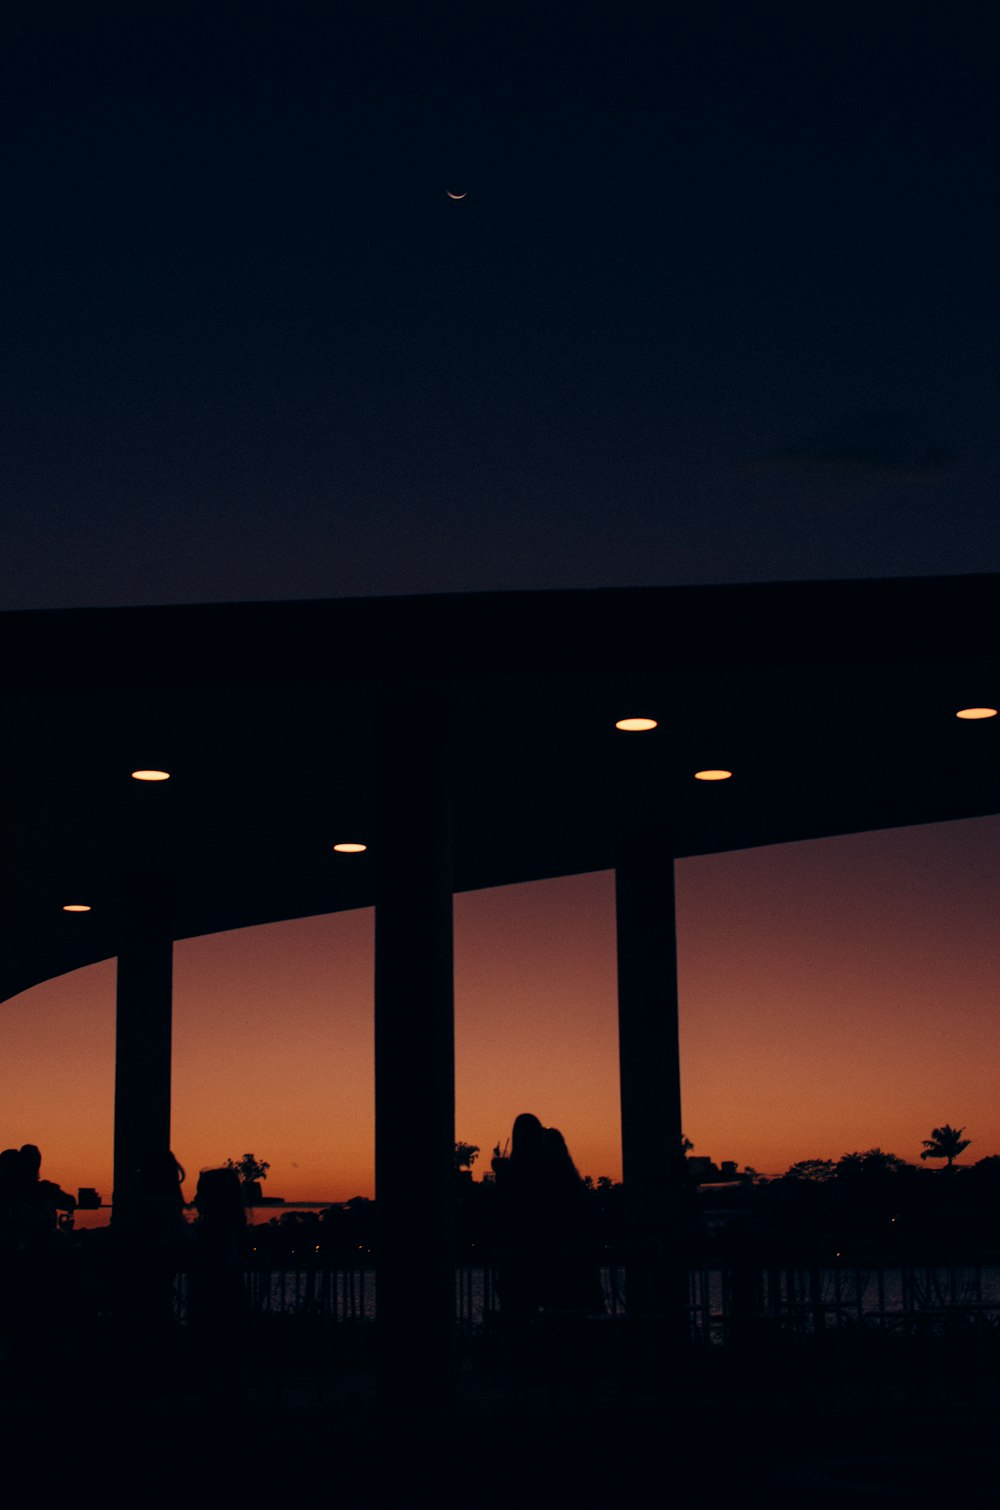 silhouette of bridge during golden hour